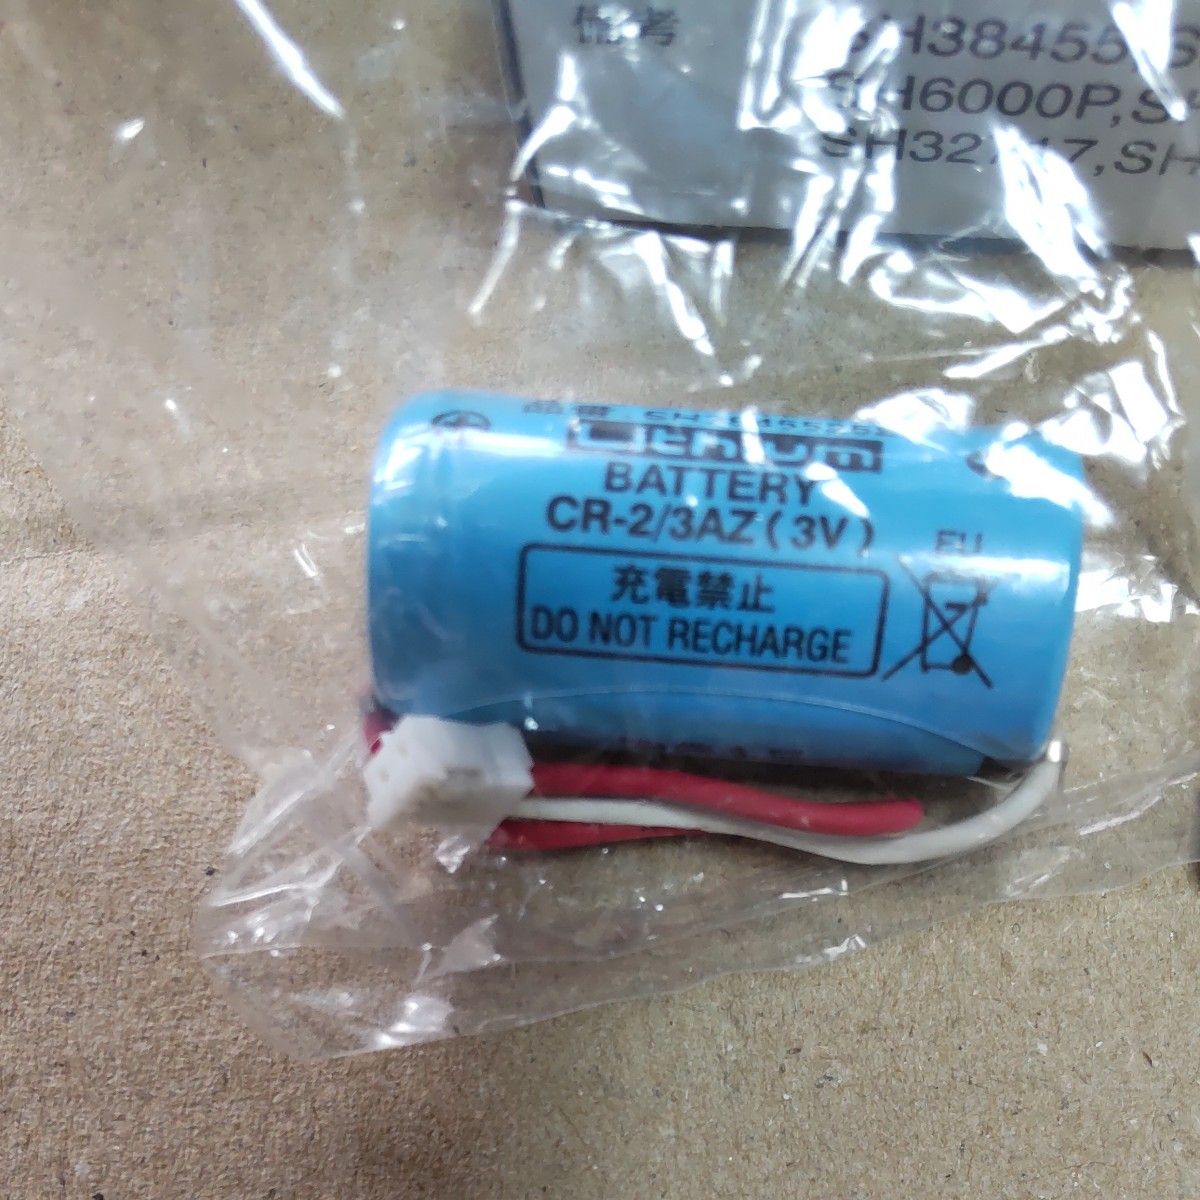 panasonic 火災報知器専用リチウム電池   SH384552520    7個